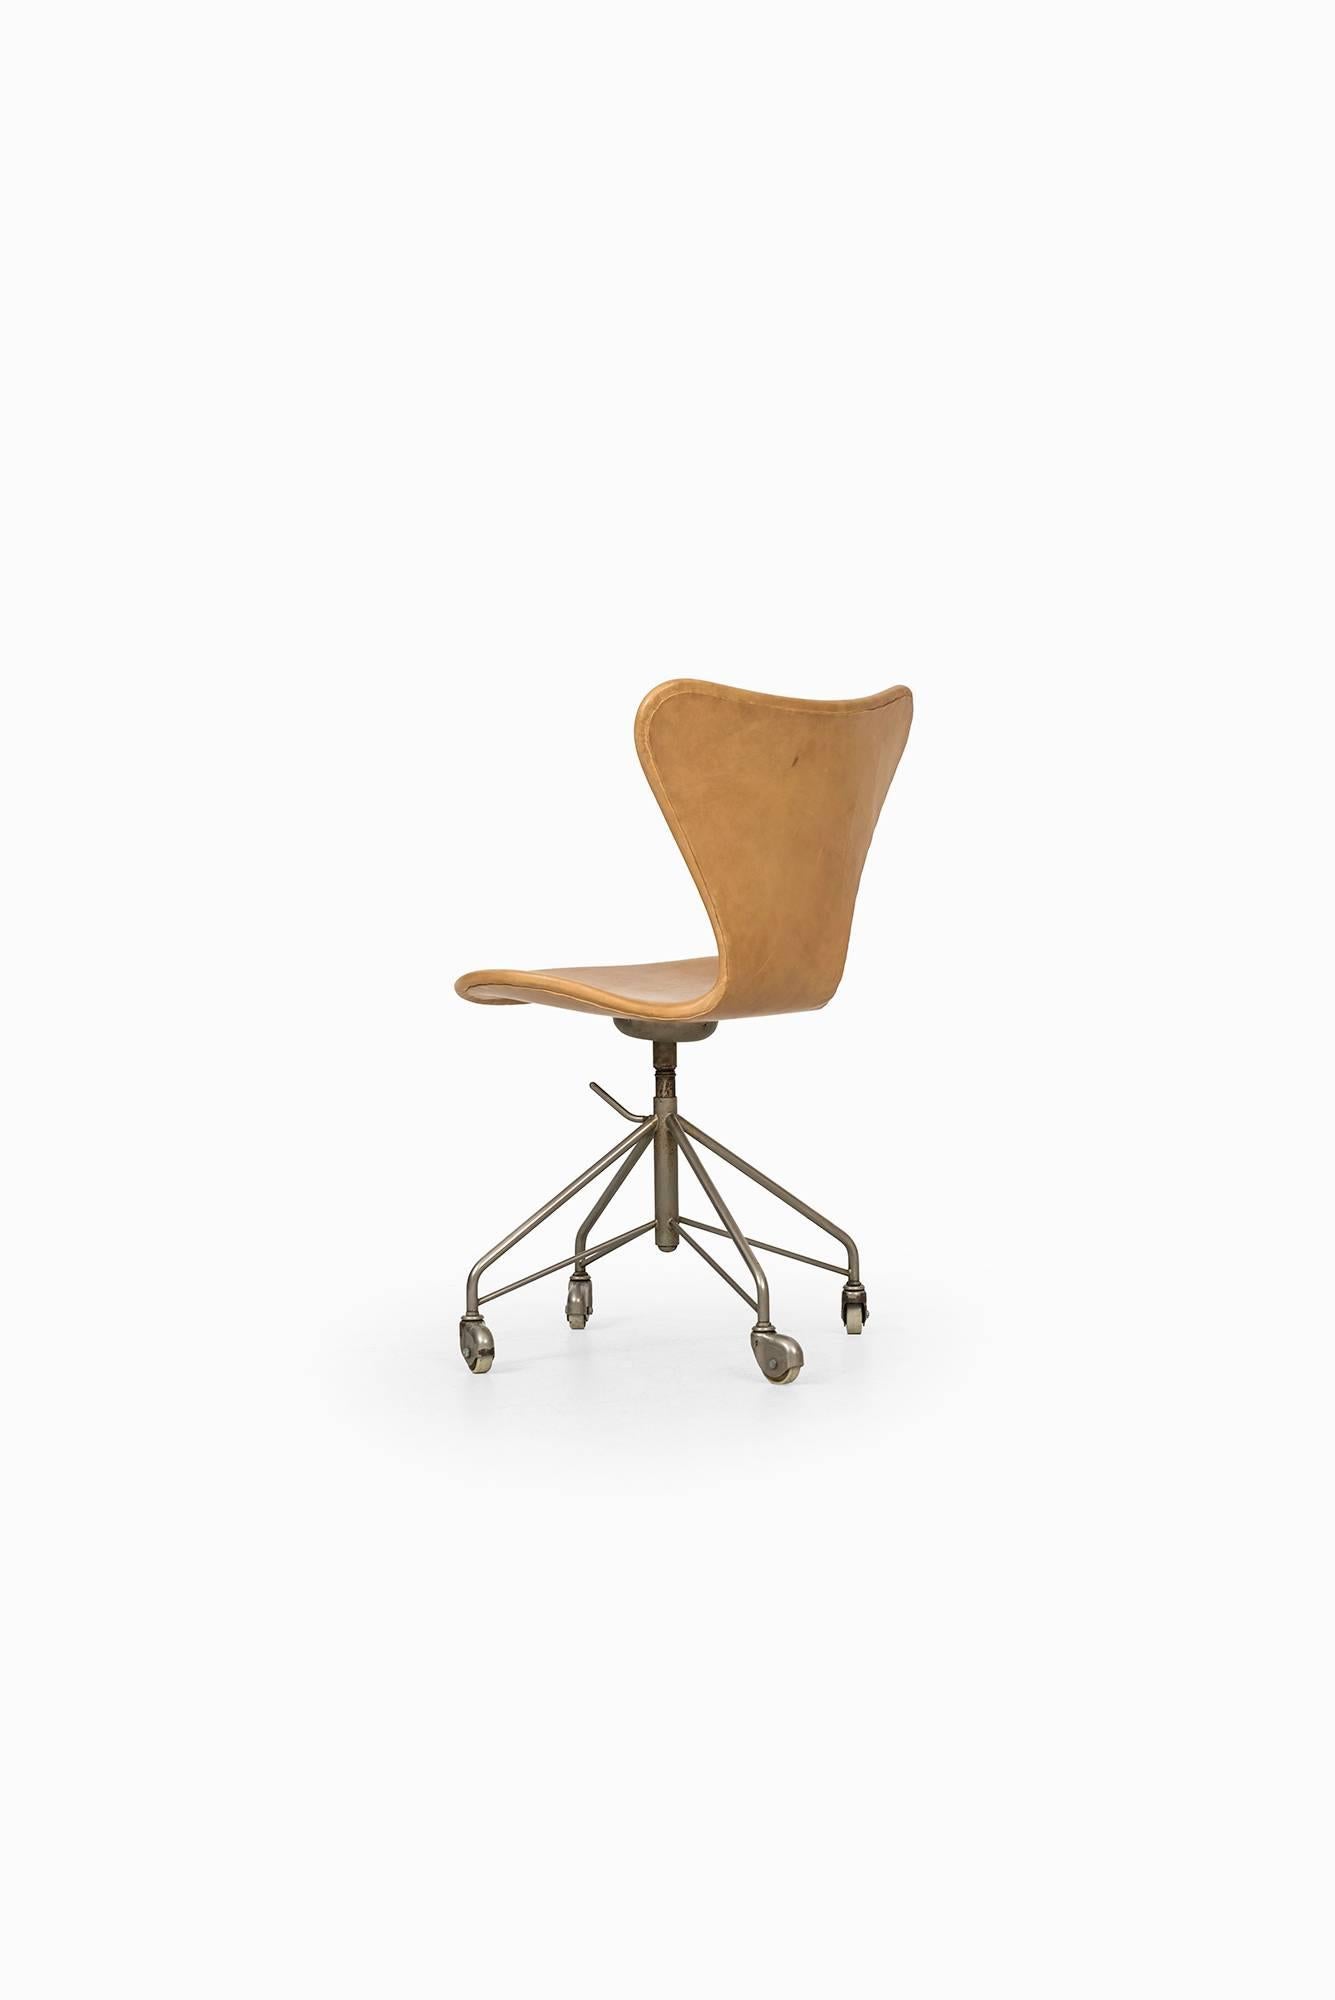 Scandinavian Modern Arne Jacobsen Office Chair Model 3117 by Fritz Hansen in Denmark